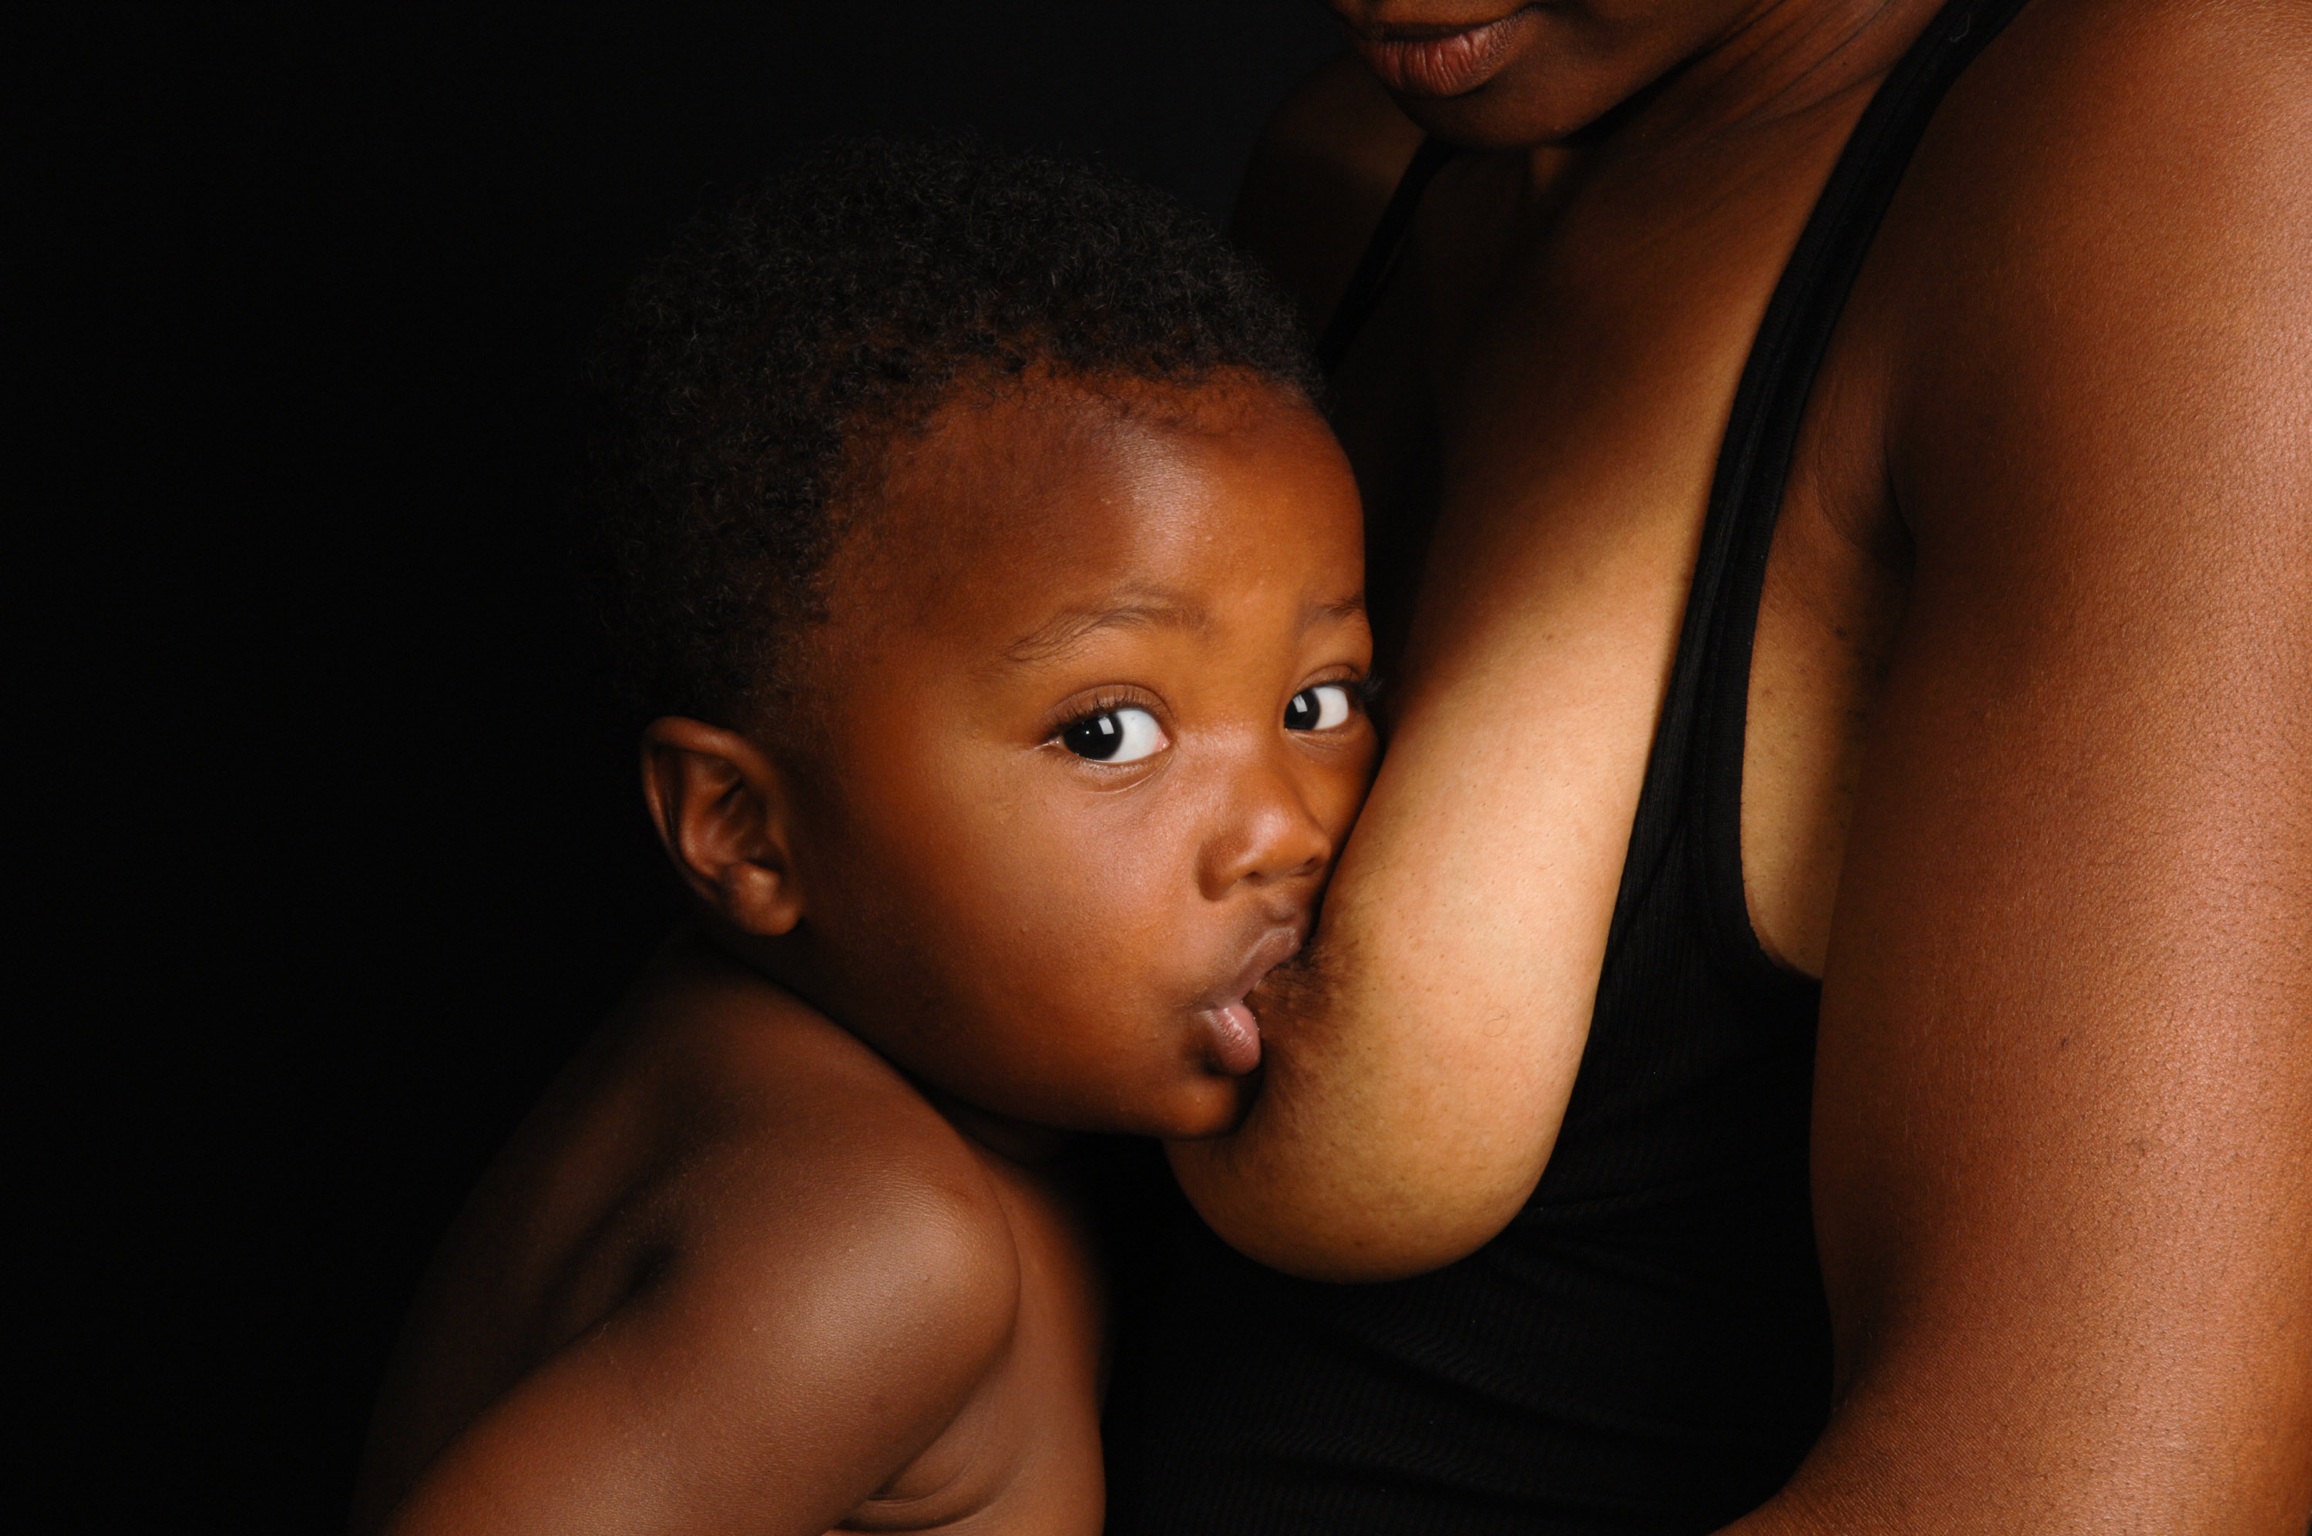 http://www.lactation-911.com/wp-content/uploads/2013/07/mother-baby-nursing.jpg